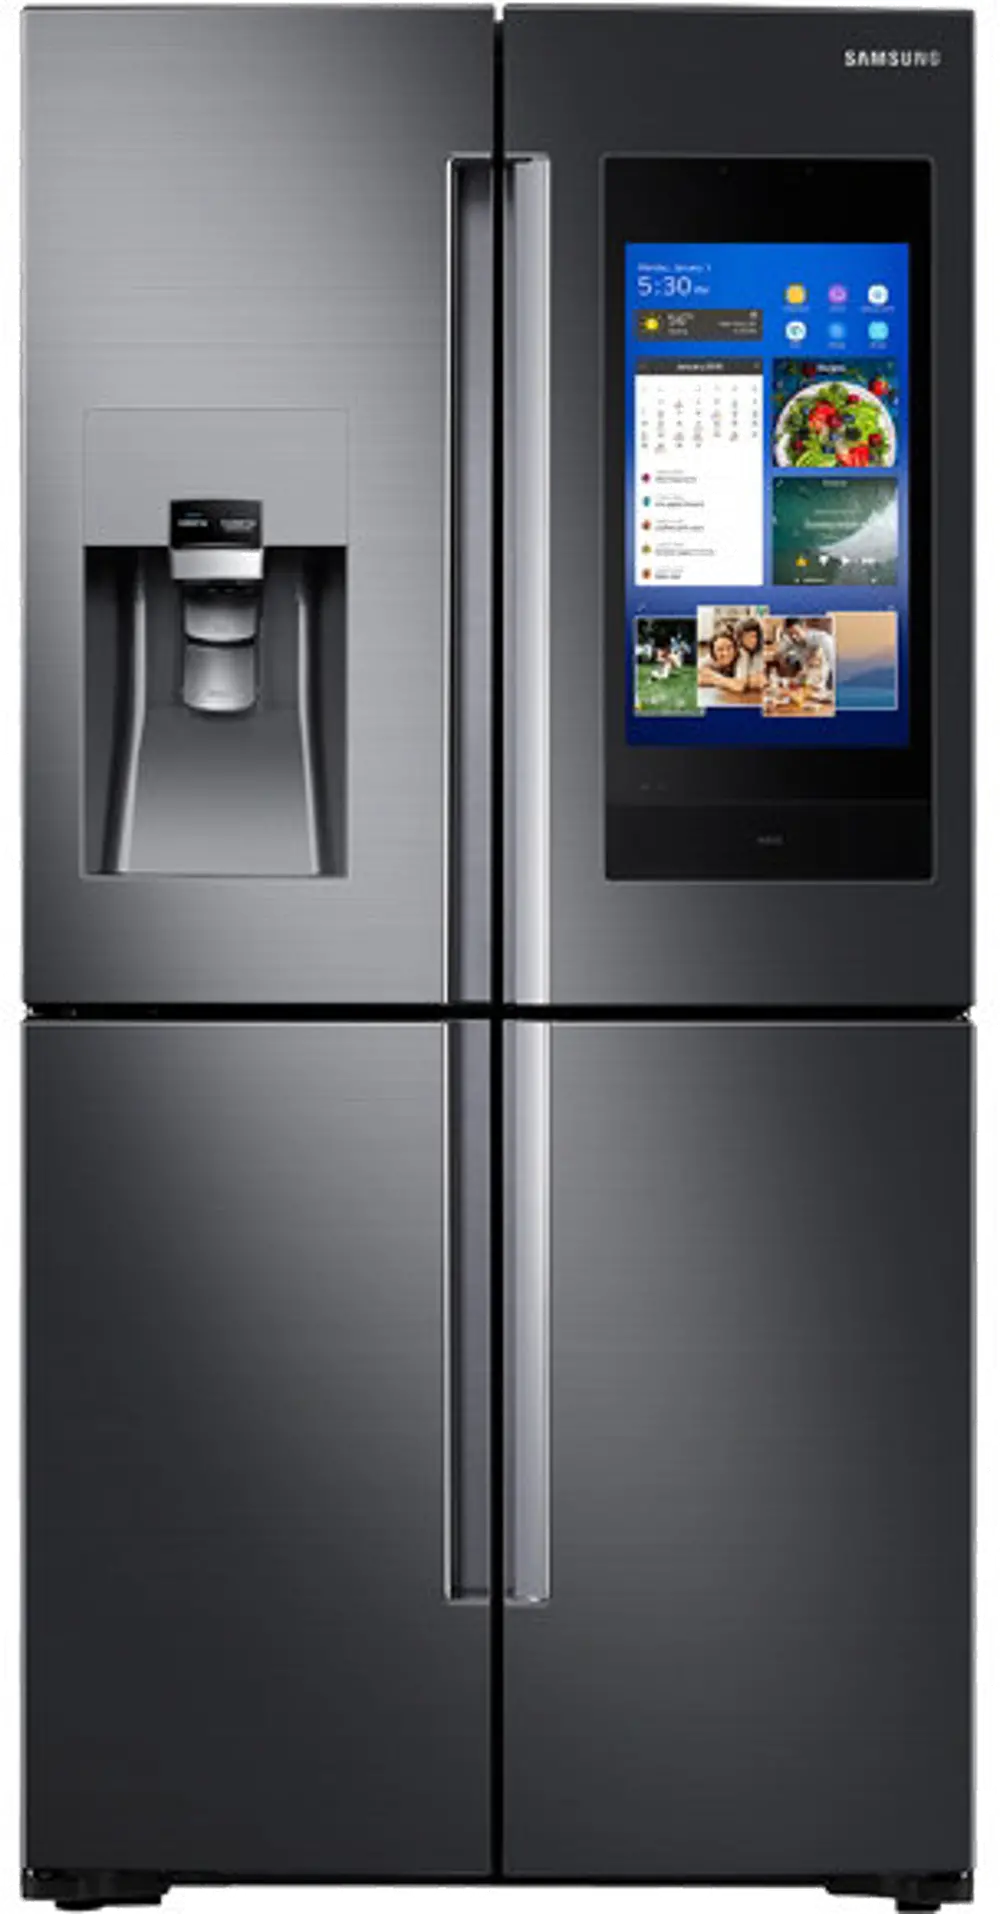 RF28M9580SG Samsung French Door Refrigerator - 36 Inch Black Stainless Steel-1